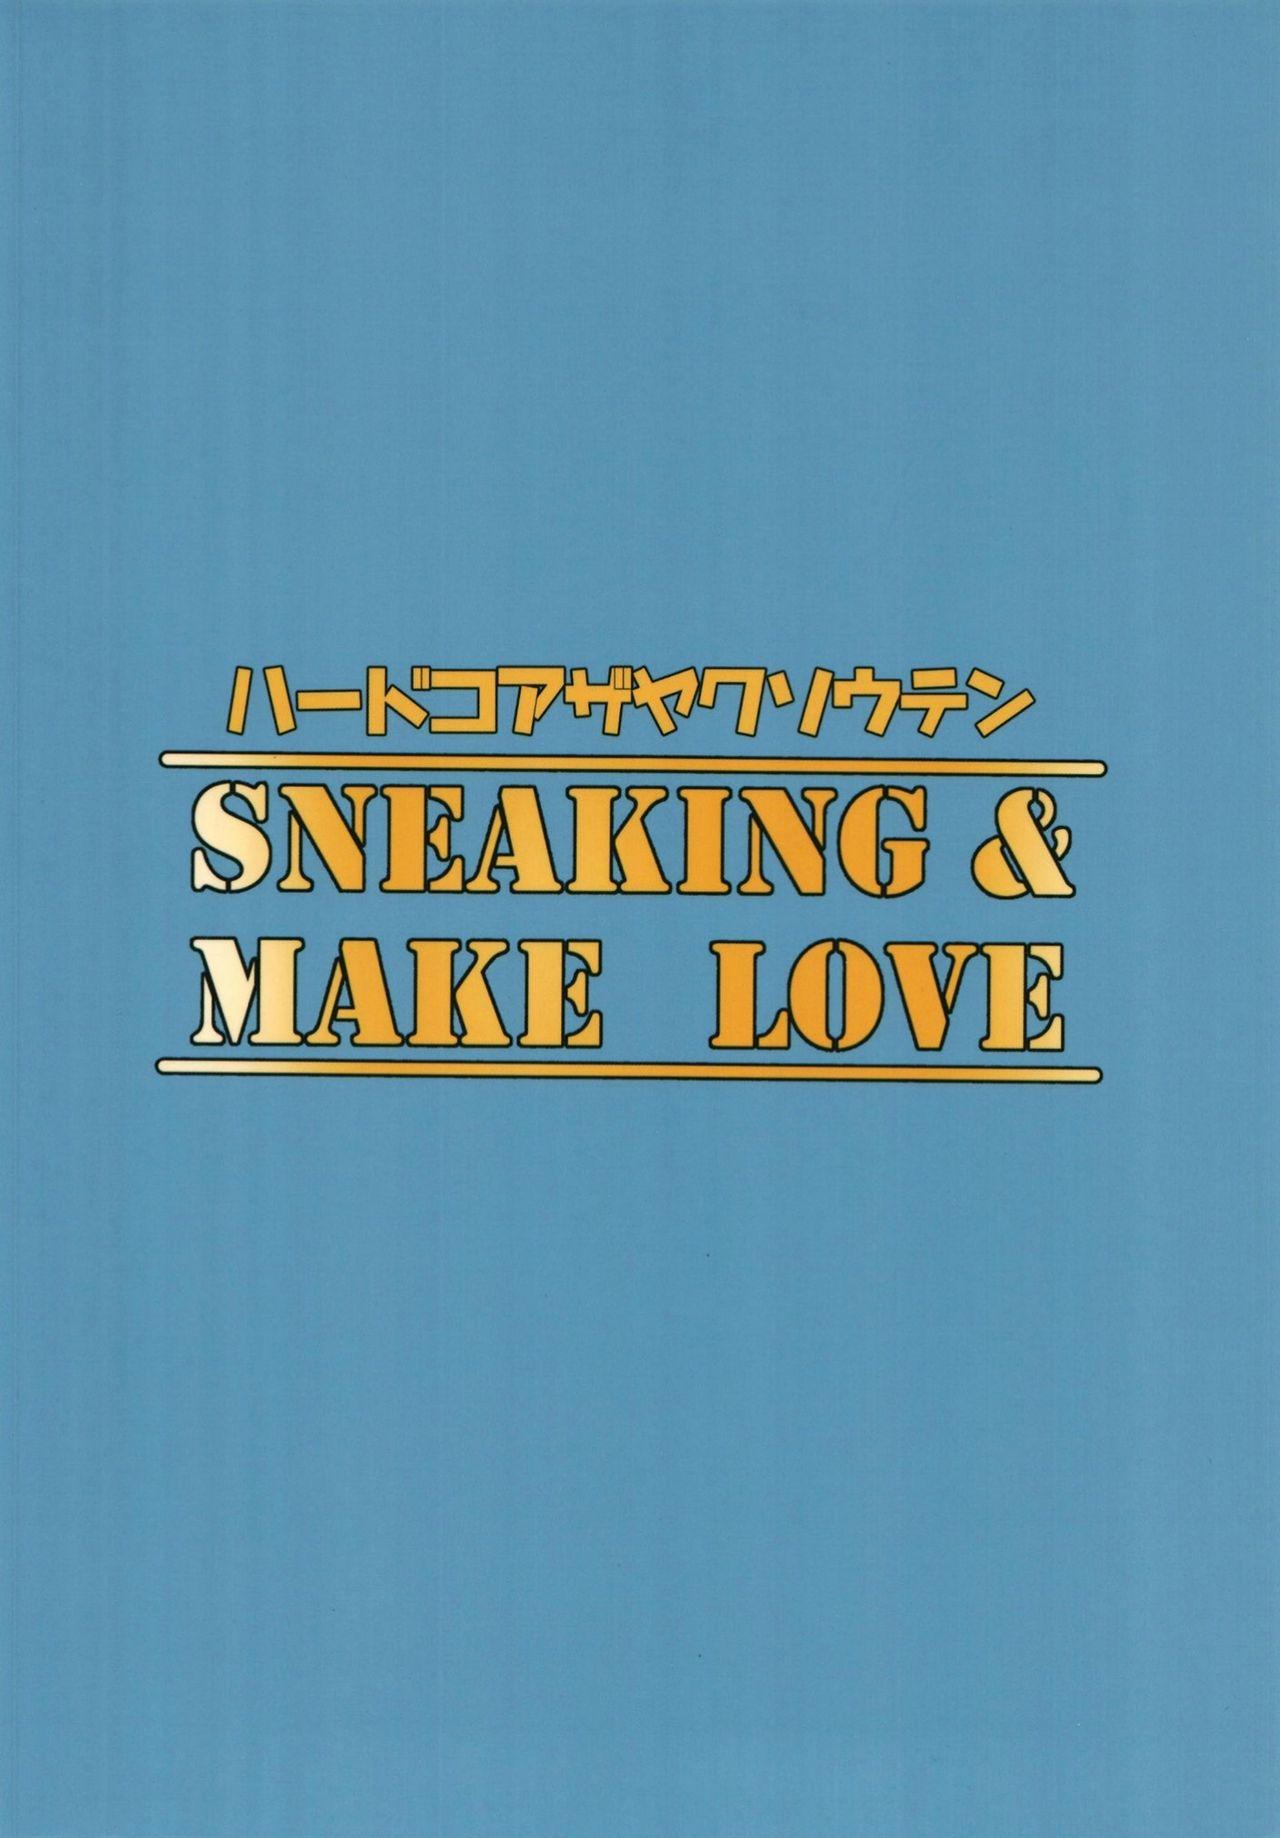 Sneaking & make Love 19